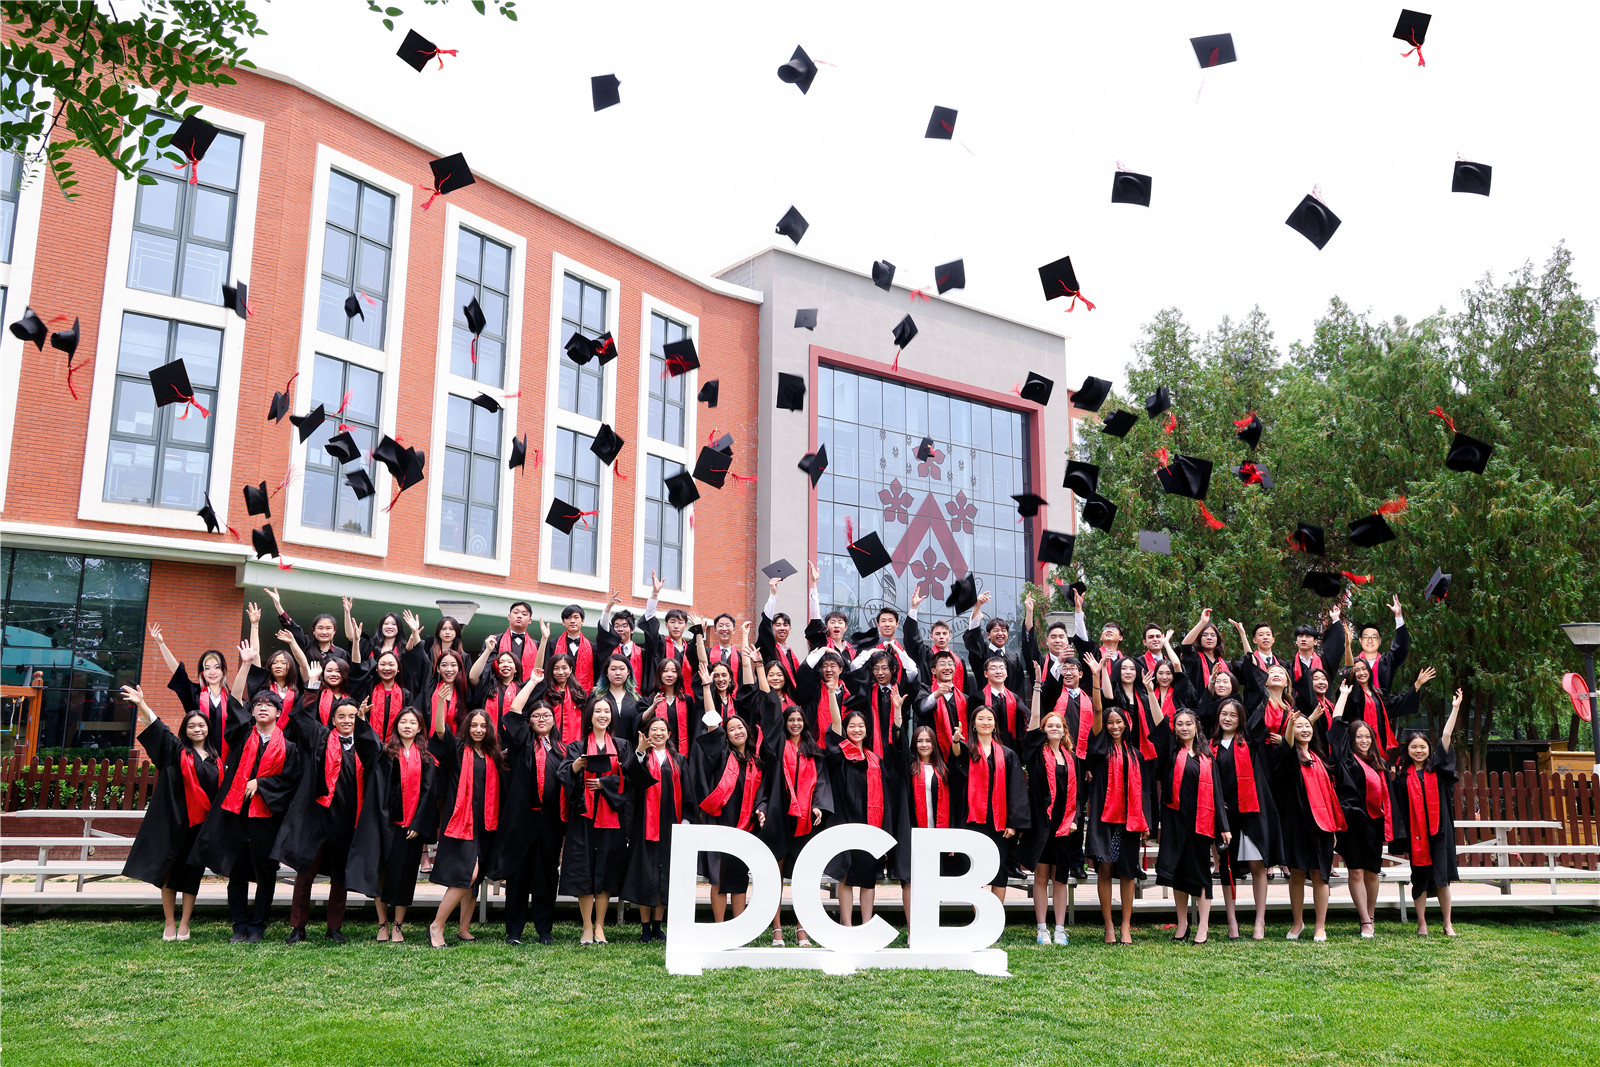 Class of 2022 graduation group photo - cap throwing